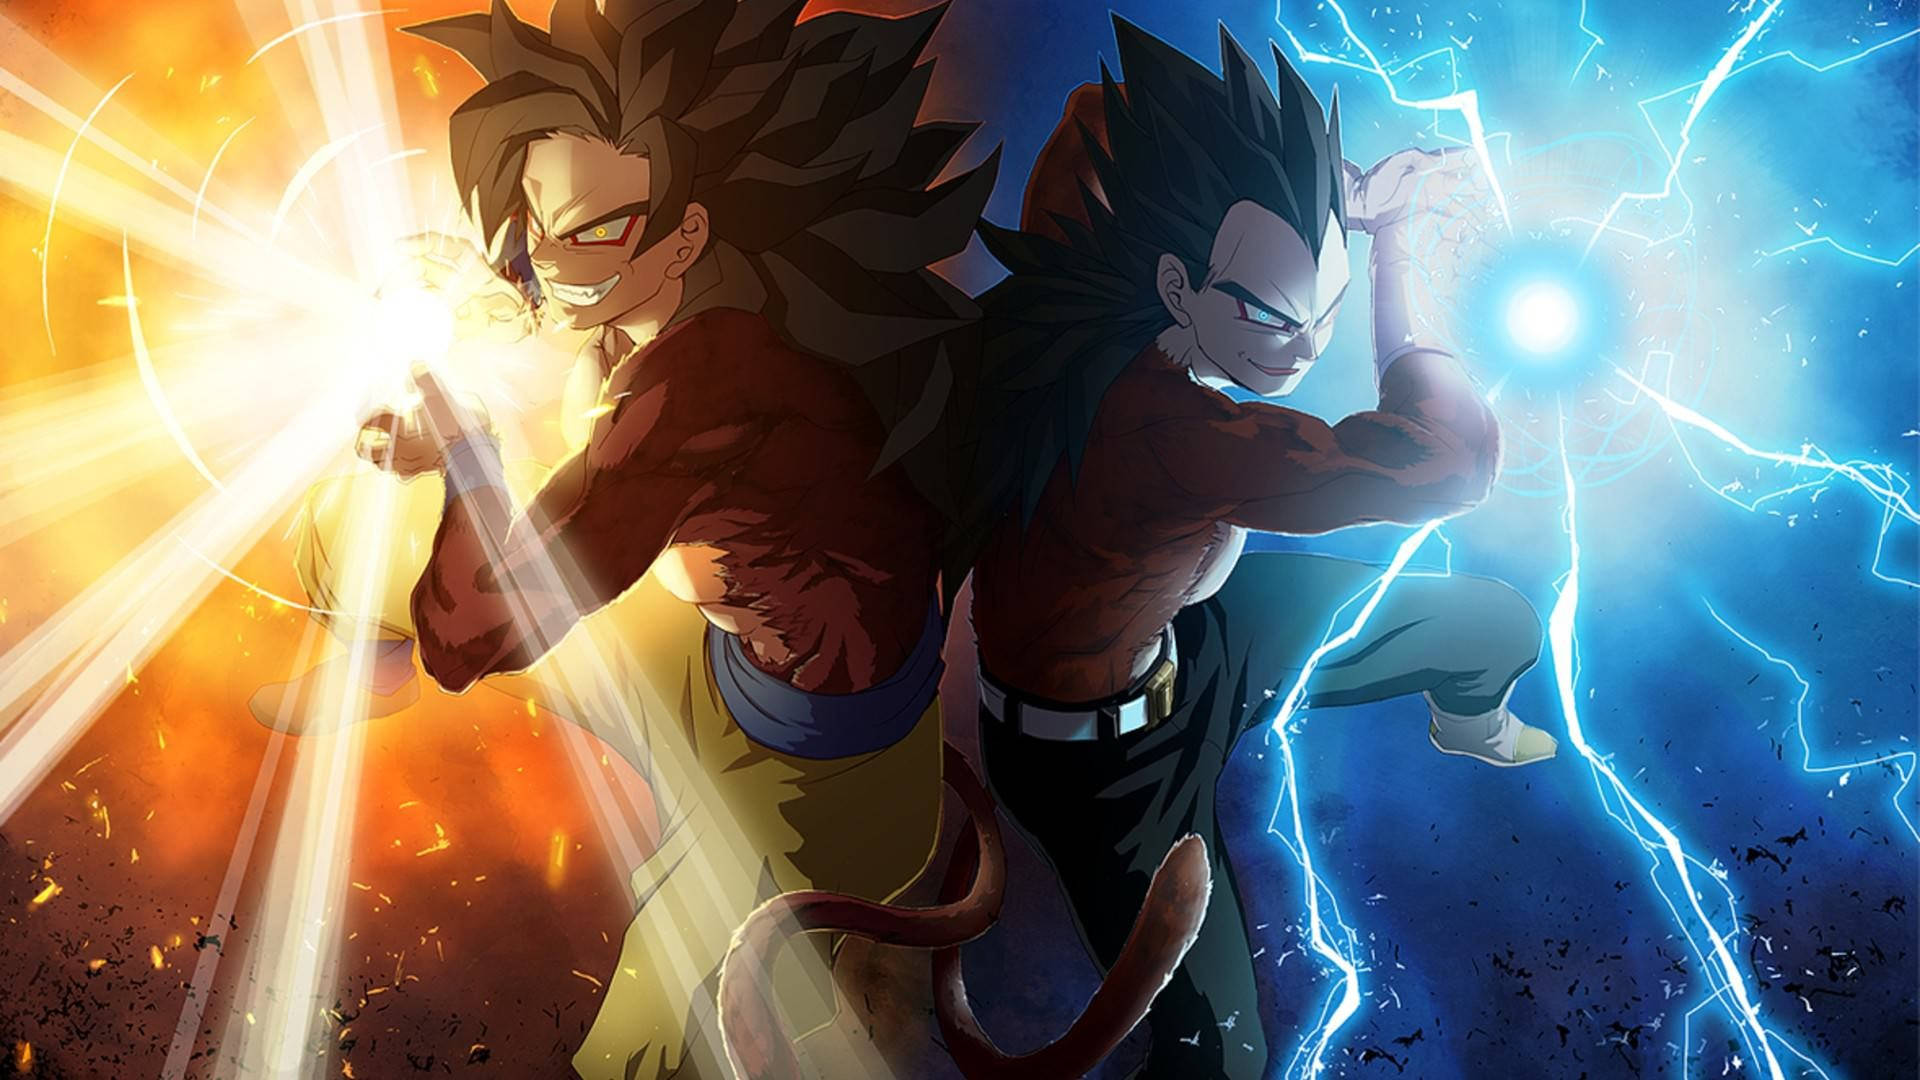 Anime Fight Goku And Vegeta Wallpaper